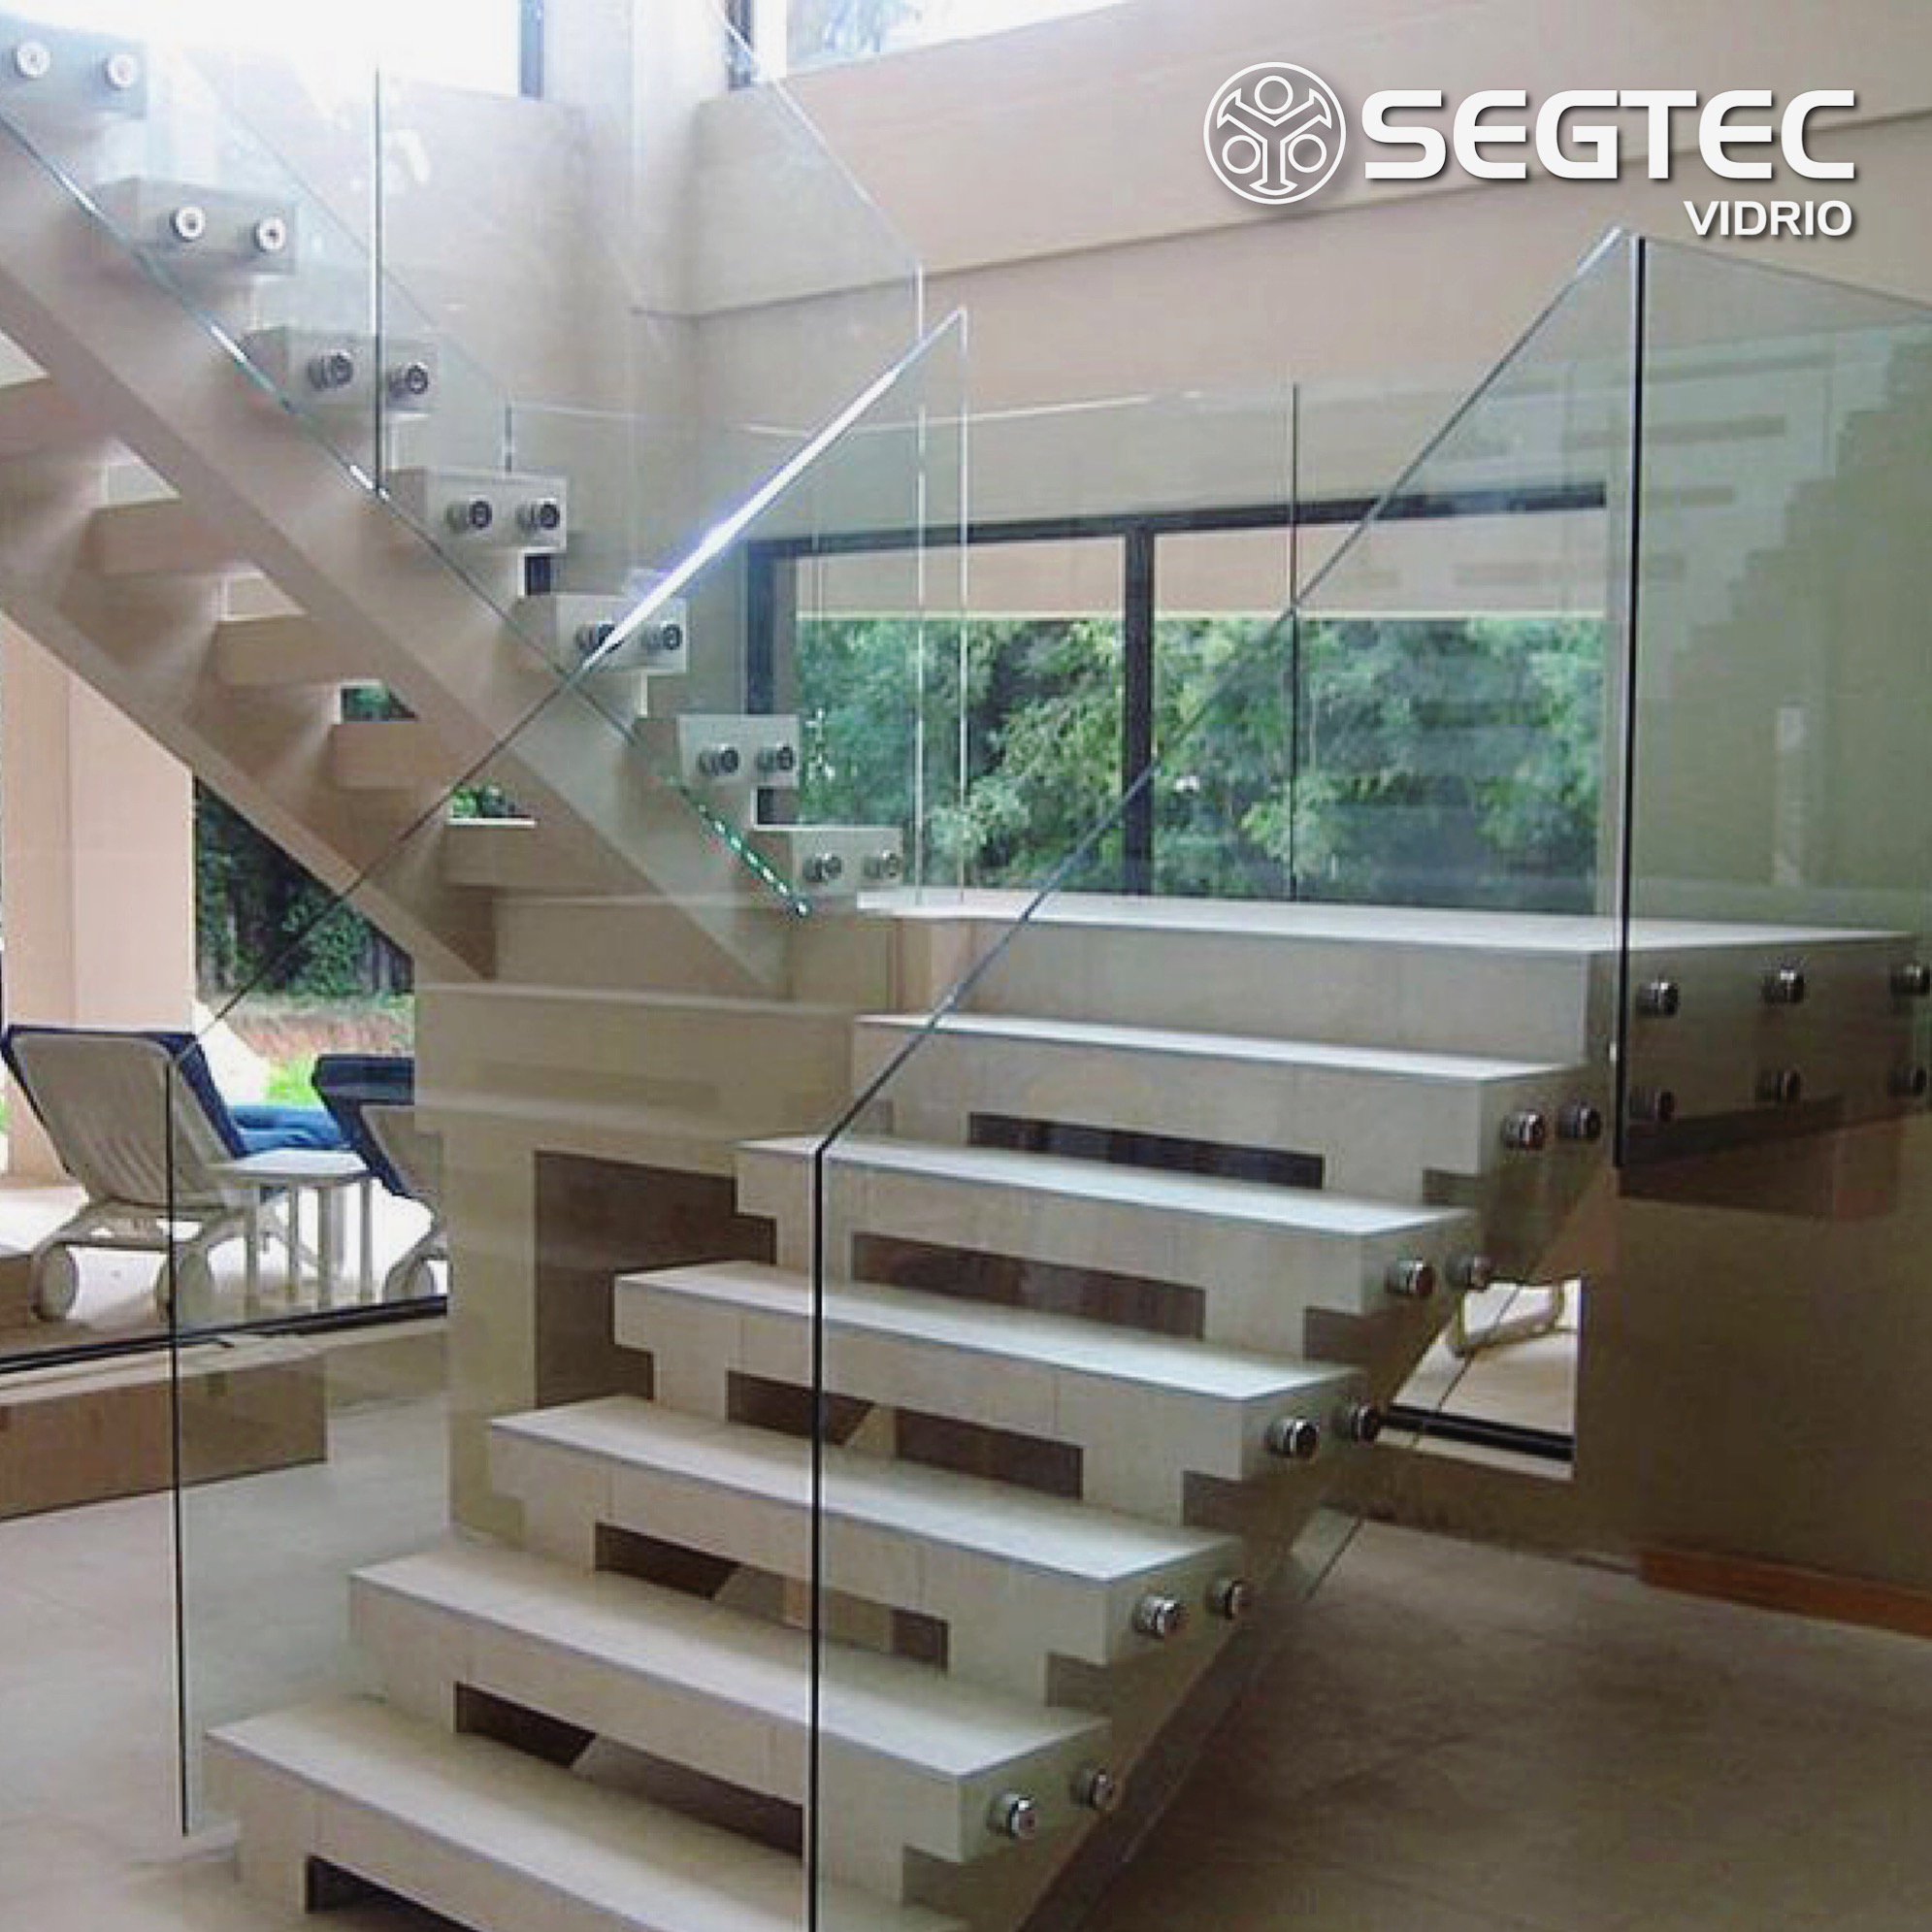 Regulación grupo Cornualles SegTec Vidrio on Twitter: "Imagina una escalera de Vidrio Templado para tu  hogar. Solo con #Segtec #hogar #escalera #vidrio #arquitectura  https://t.co/TkjUVtDkRH" / Twitter